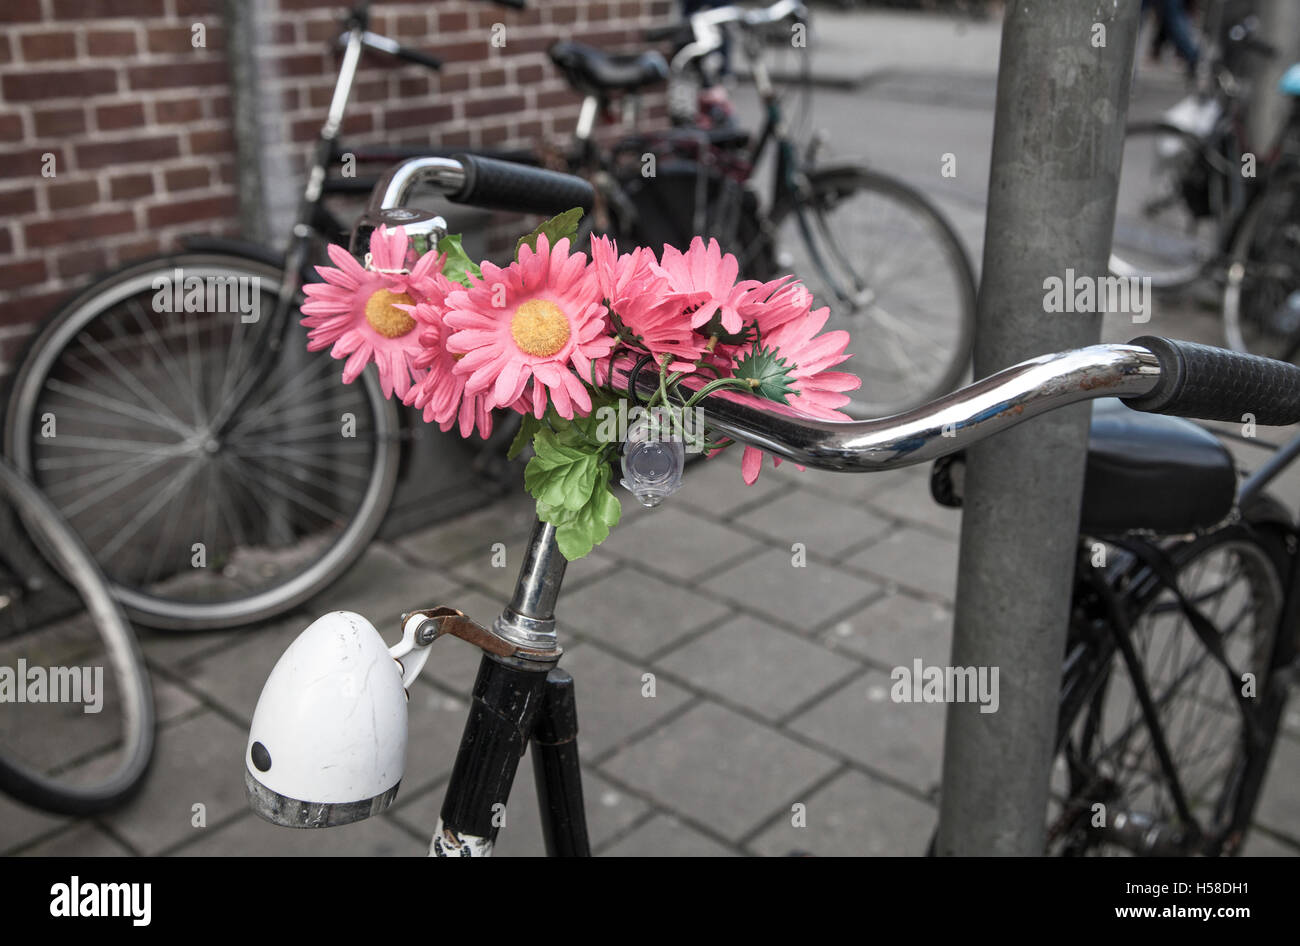 Flowers on bike in Amsterdam Stock Photo